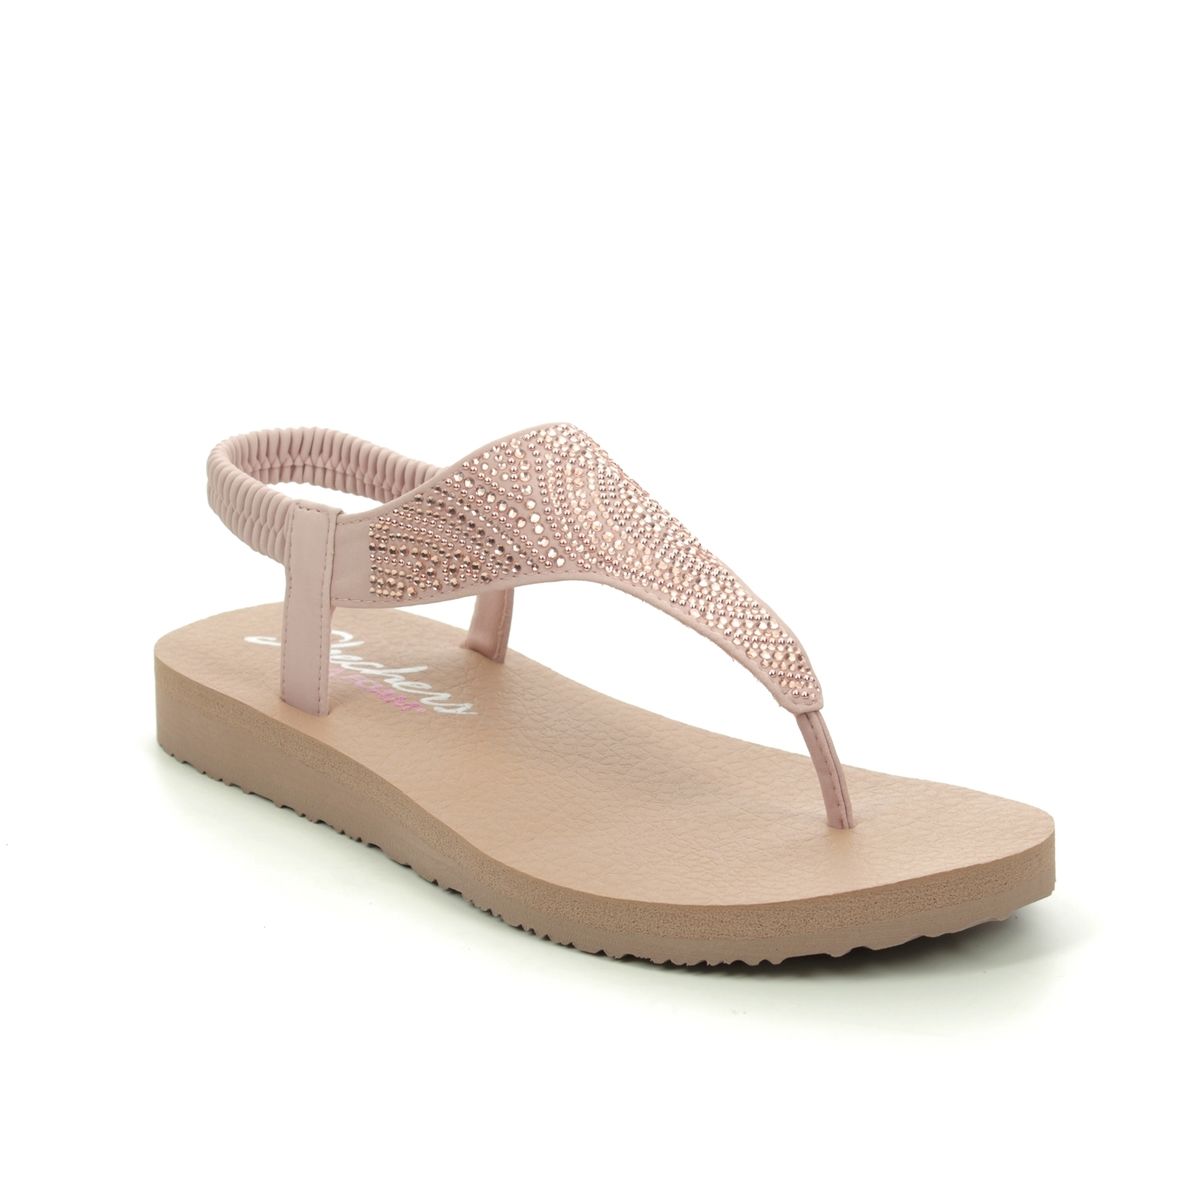 blush pink sandals